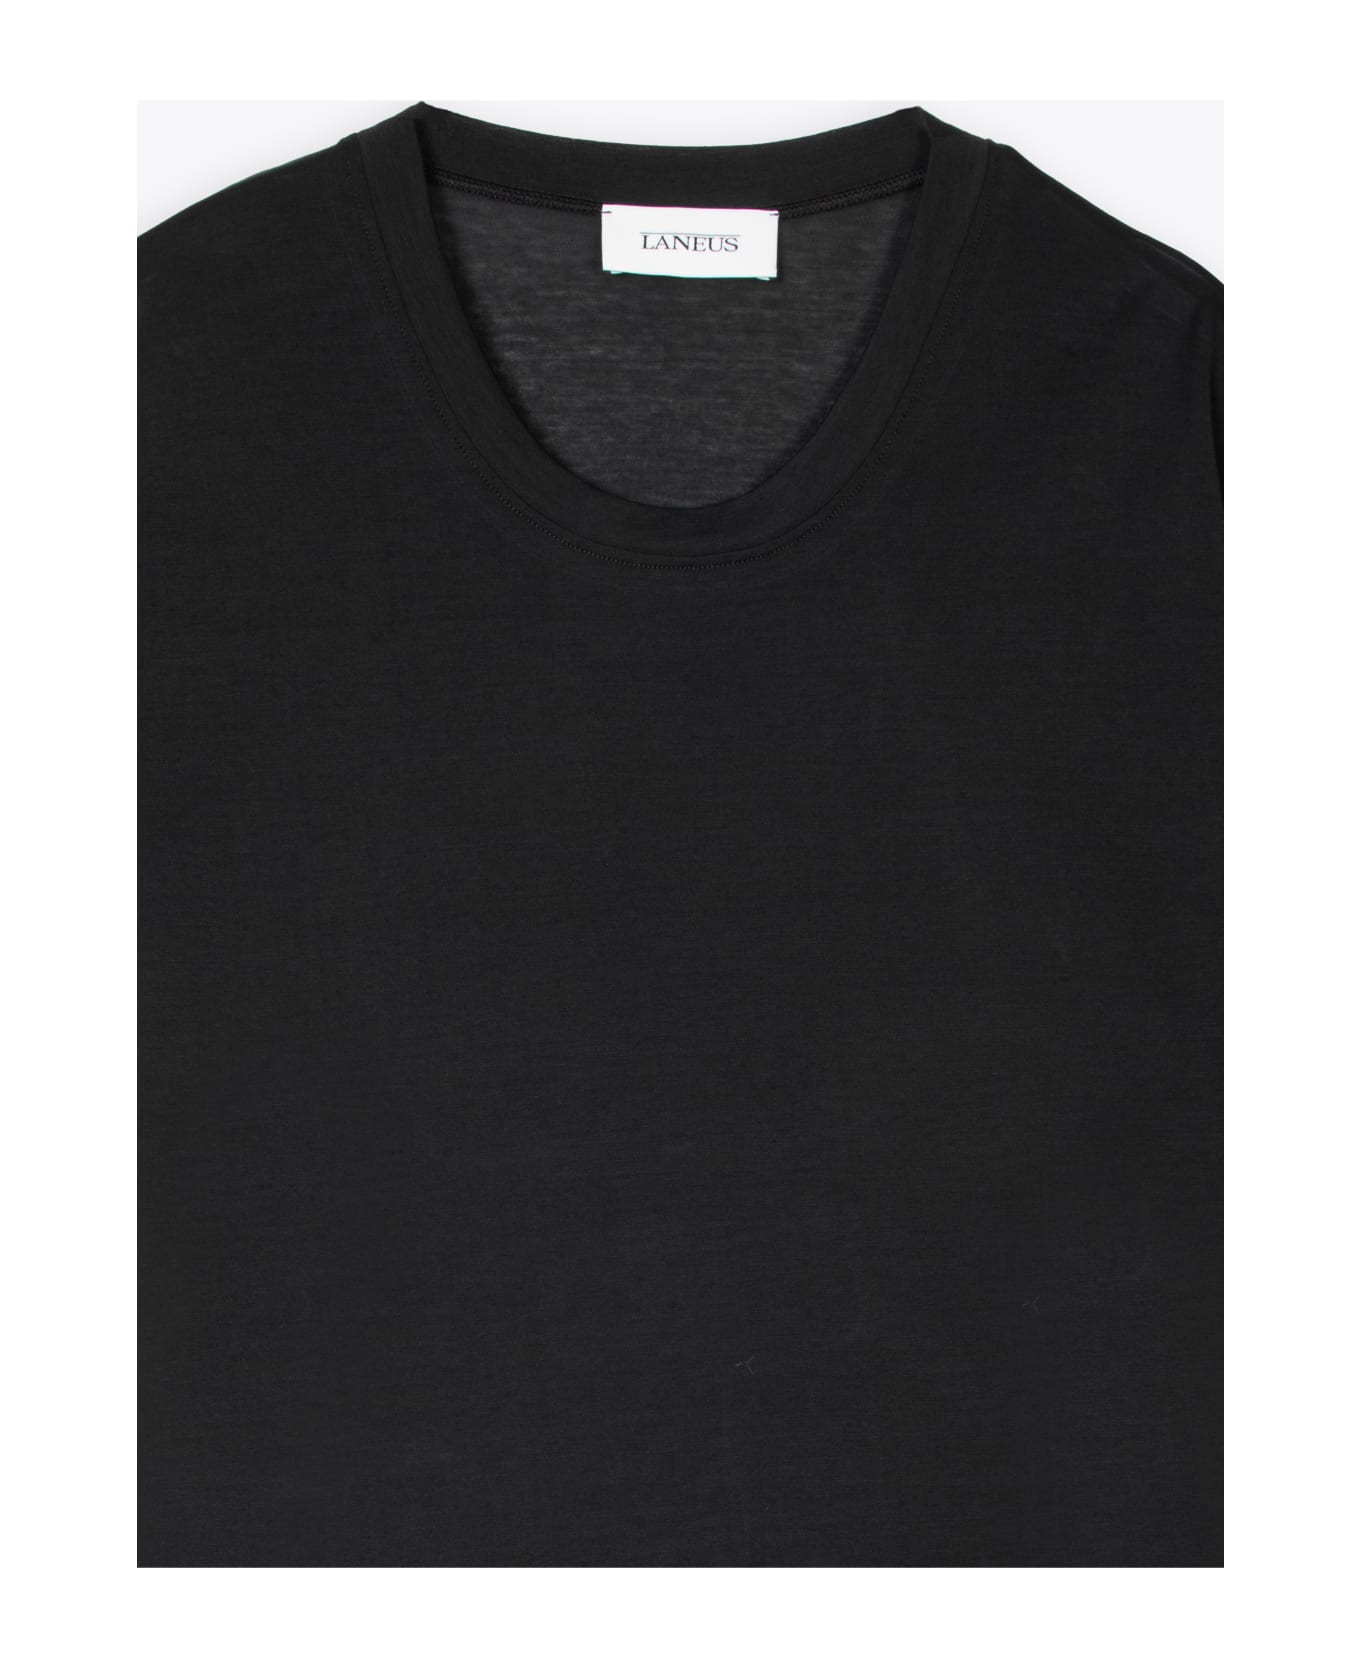 Laneus Crewneck Man Black ultra-light cotton t-shirt - Nero